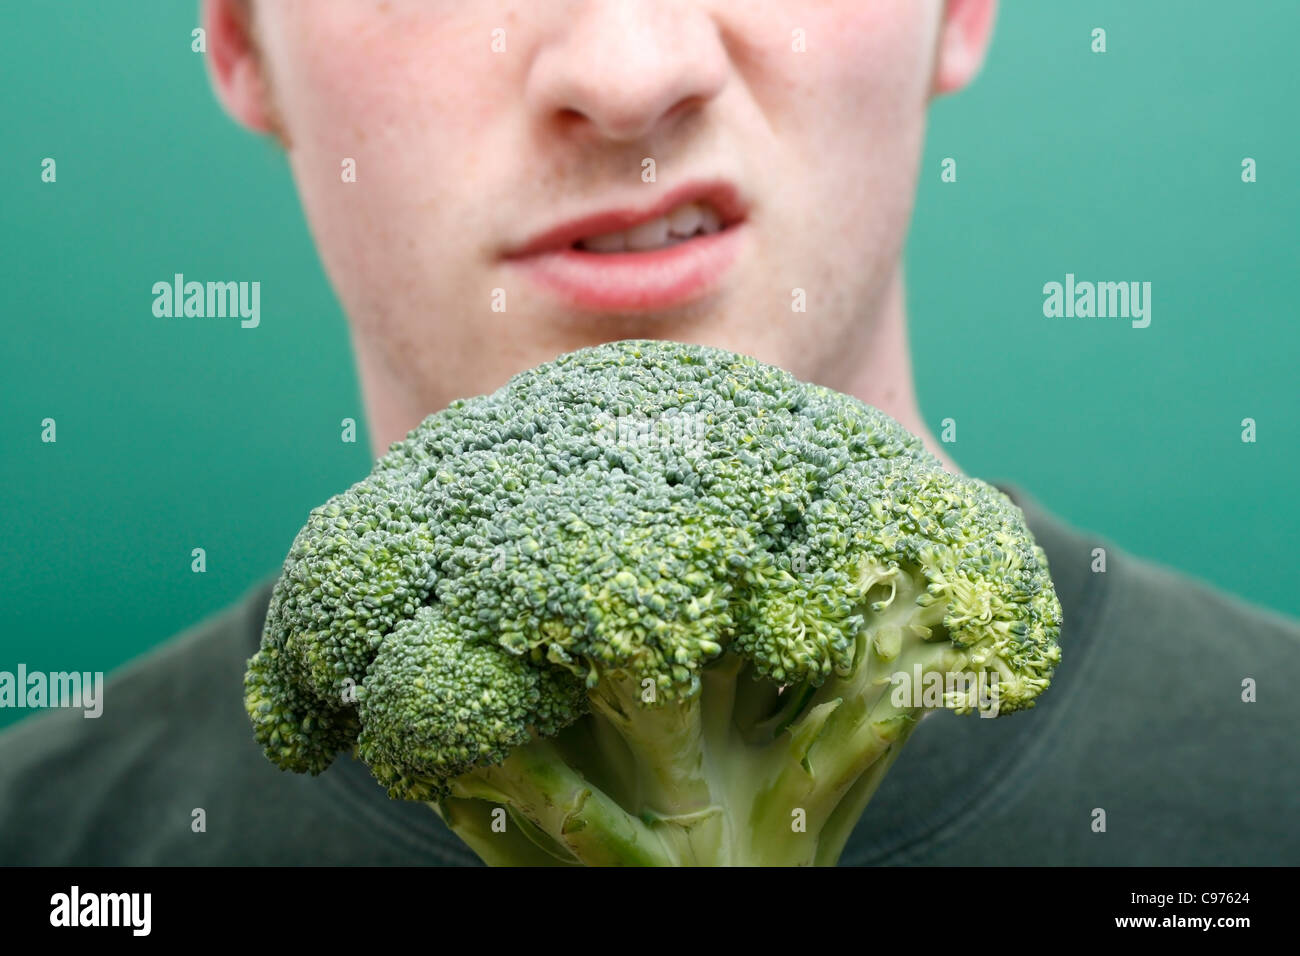 A man disliking broccoli Stock Photo